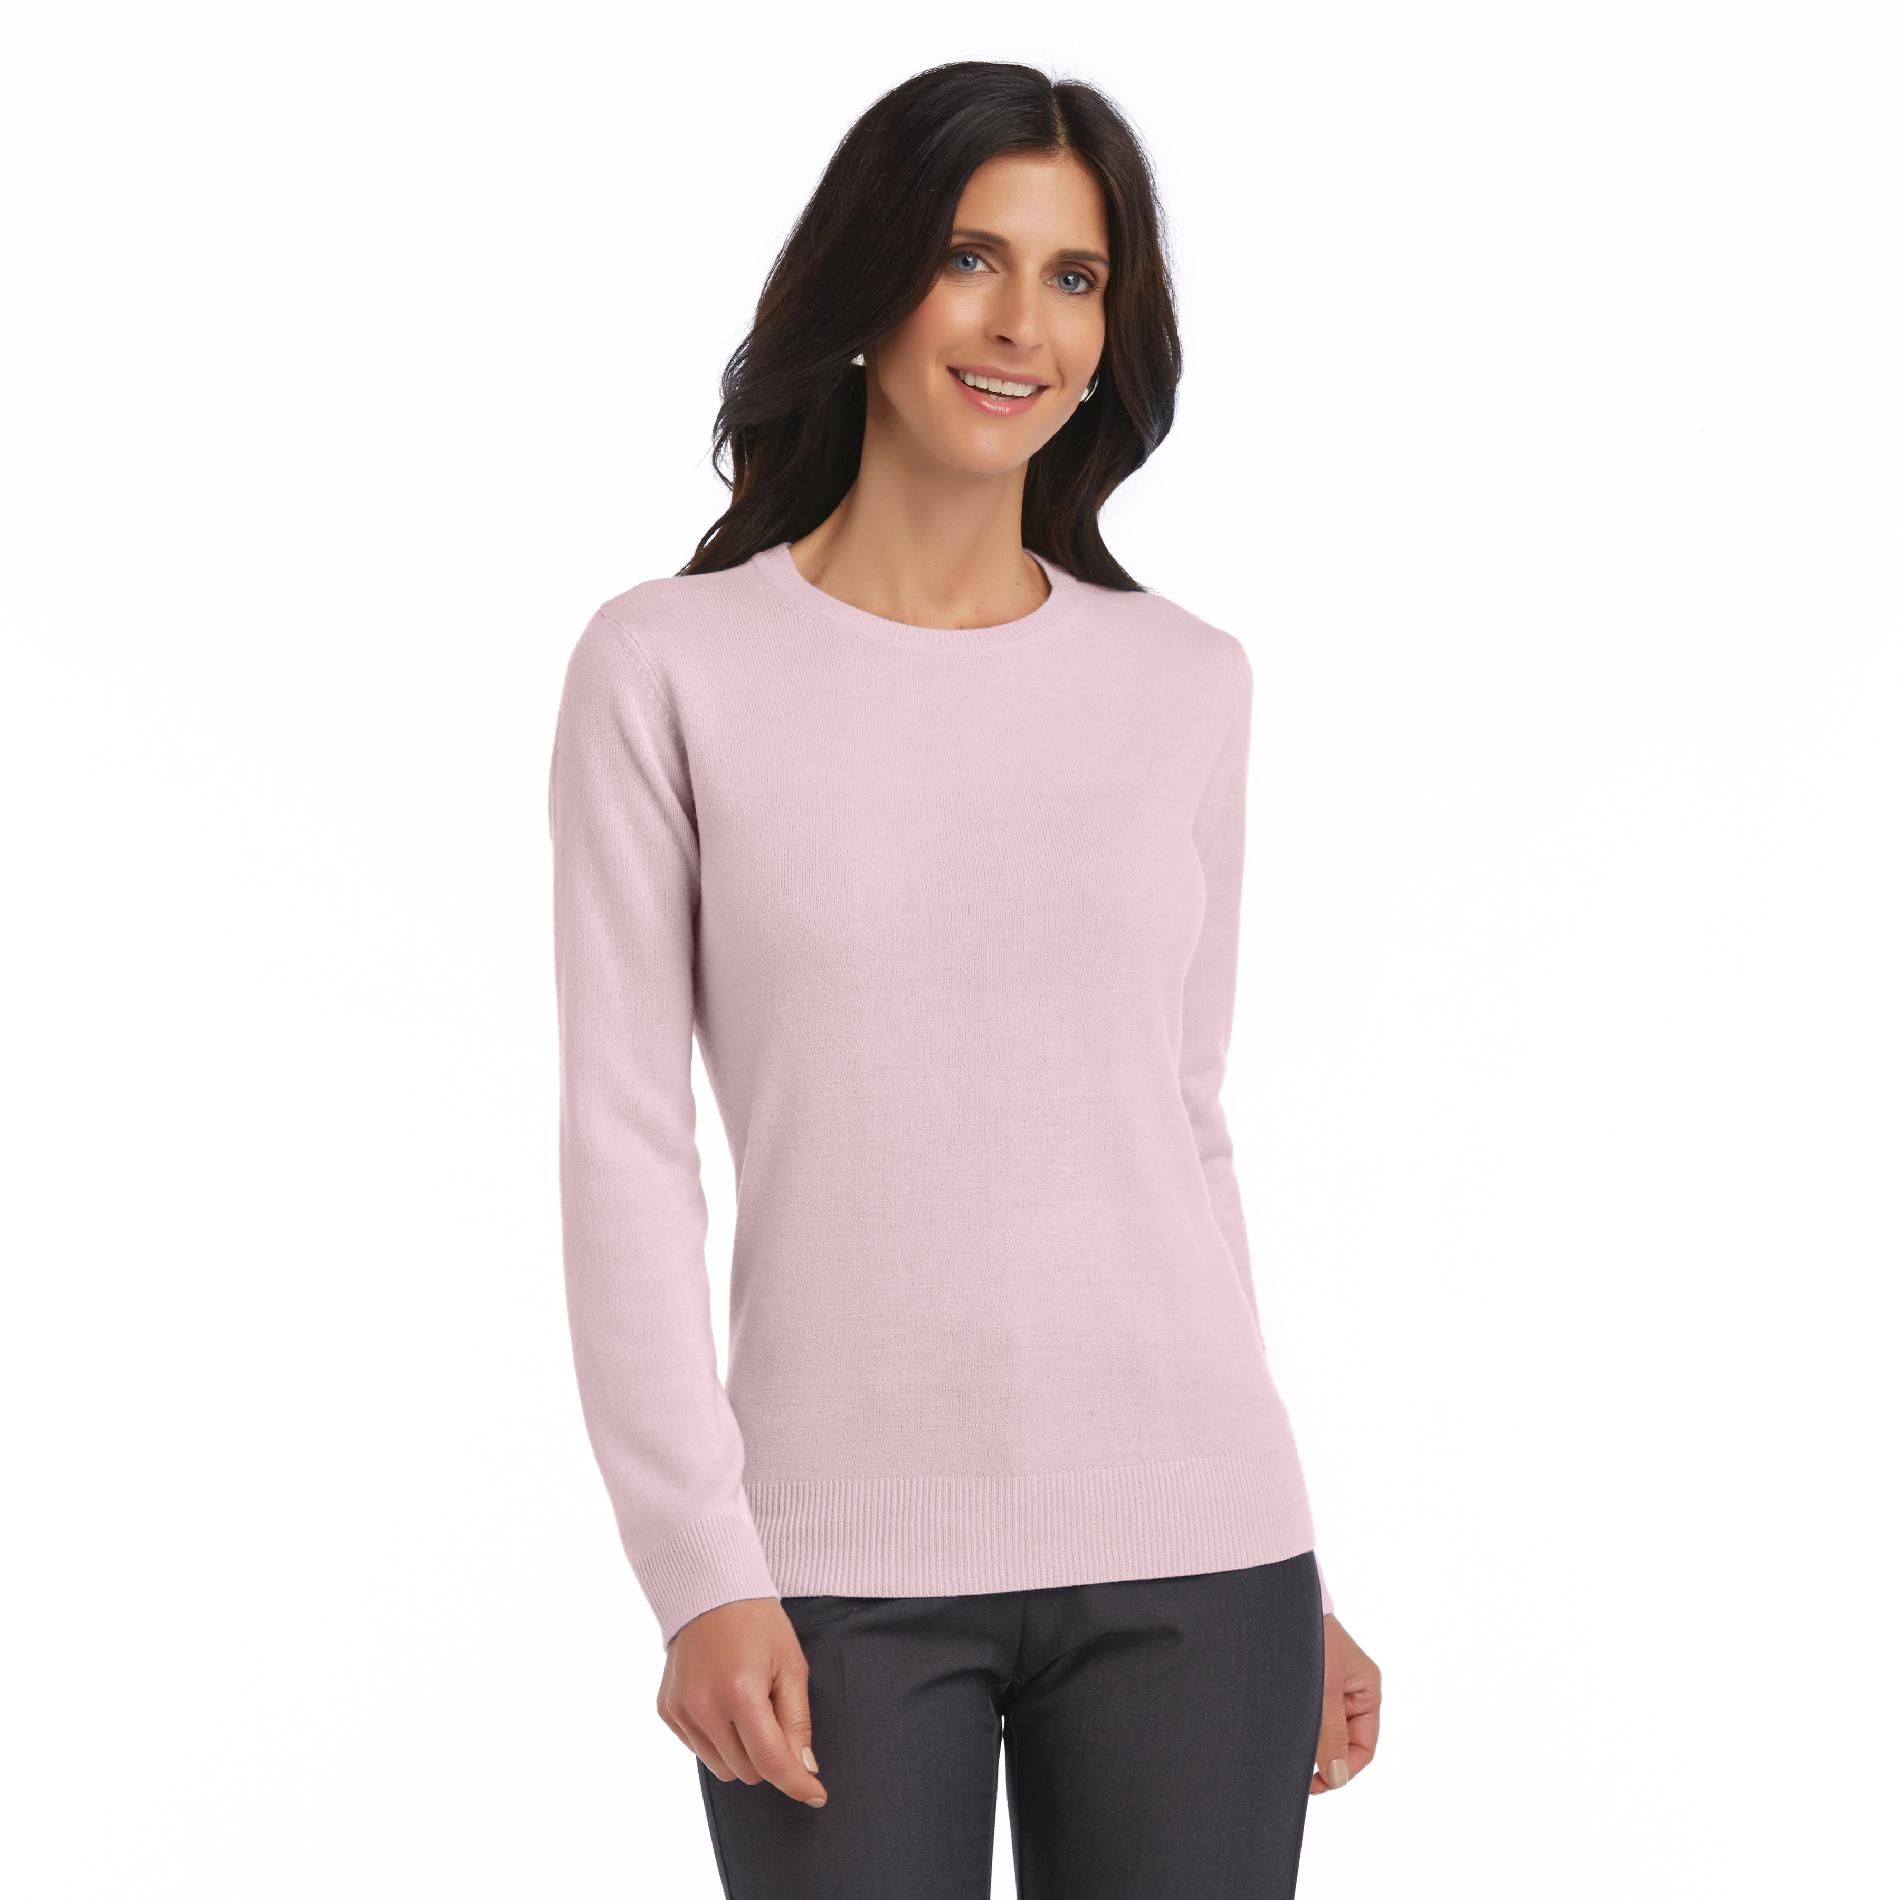 Basic Editions Women's Long-Sleeve Sweater